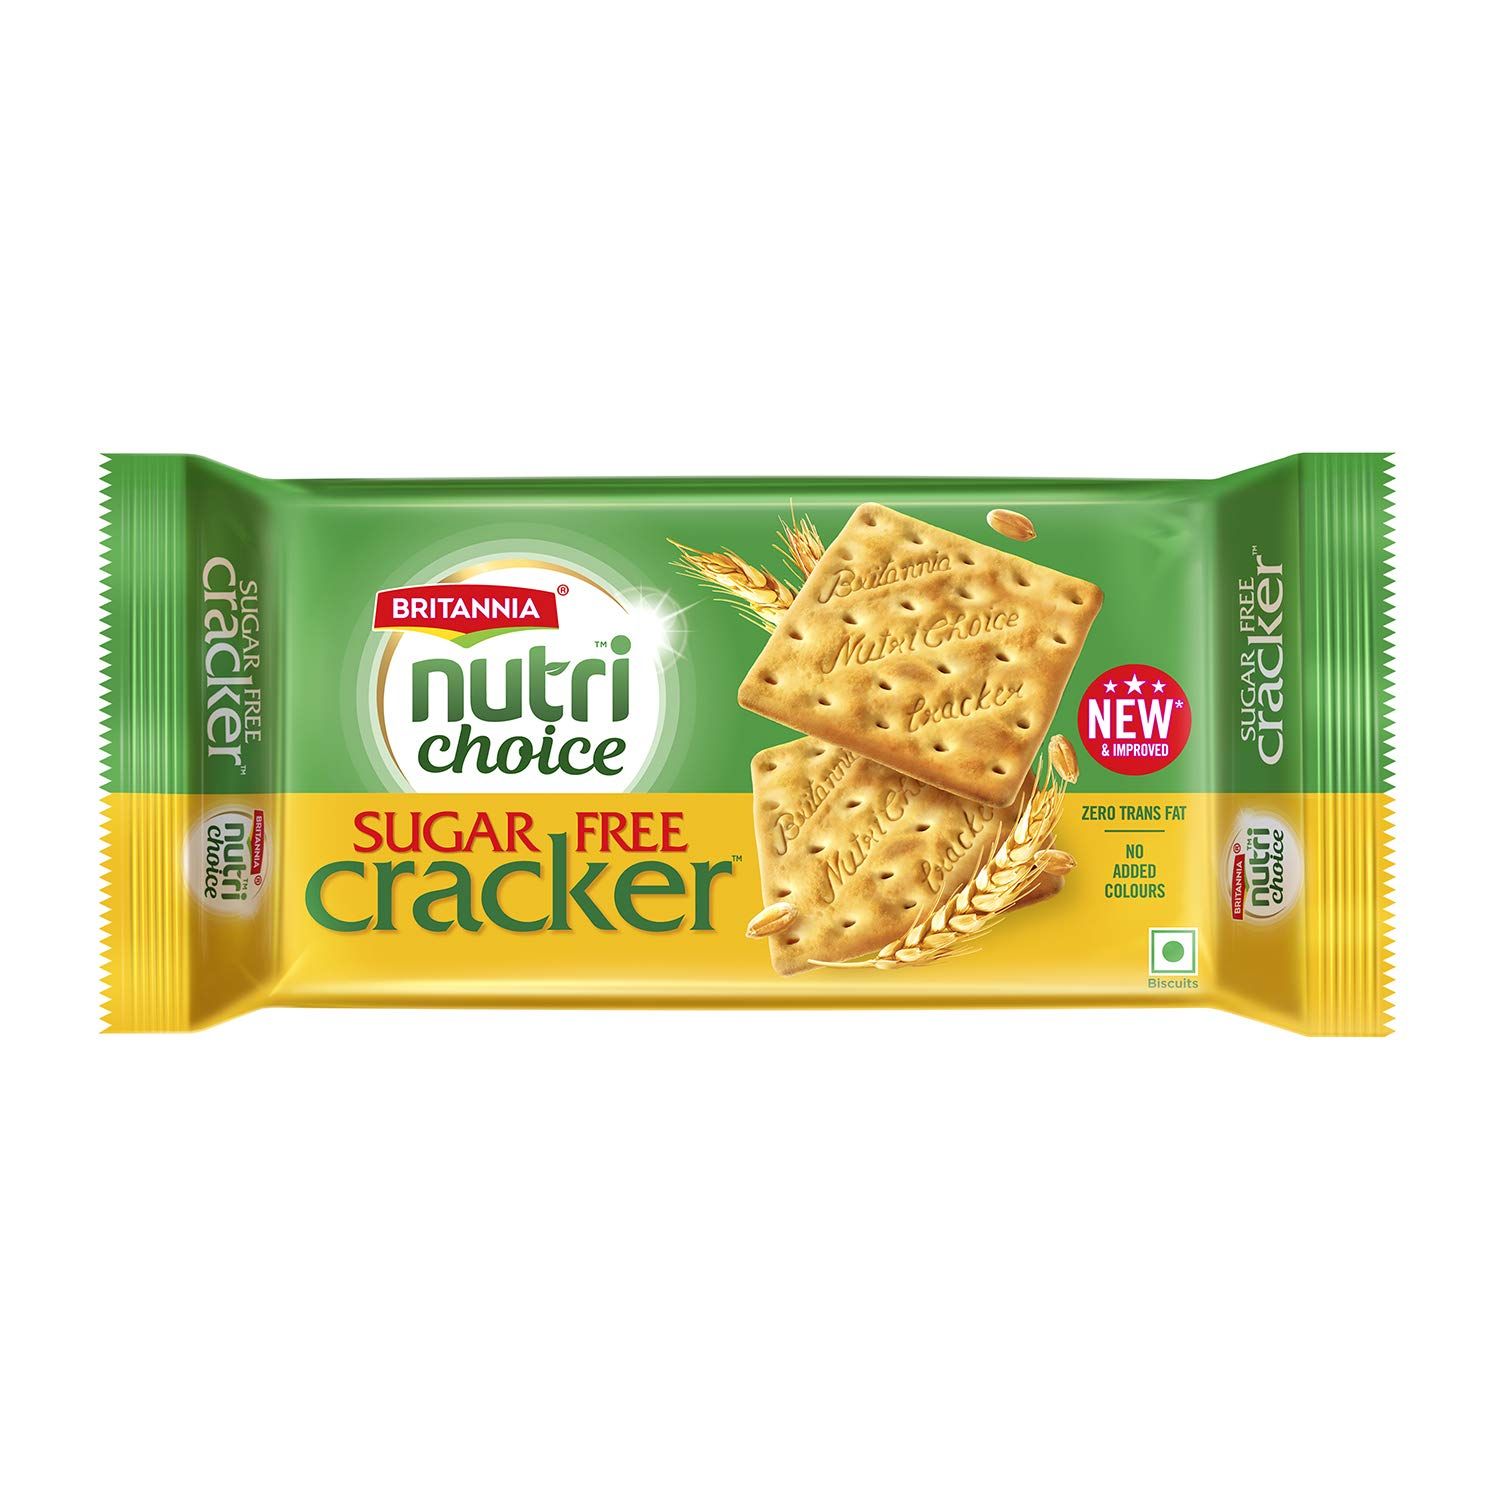 Britannia Nutrichoice Sugar Free Cracker Biscuit Image